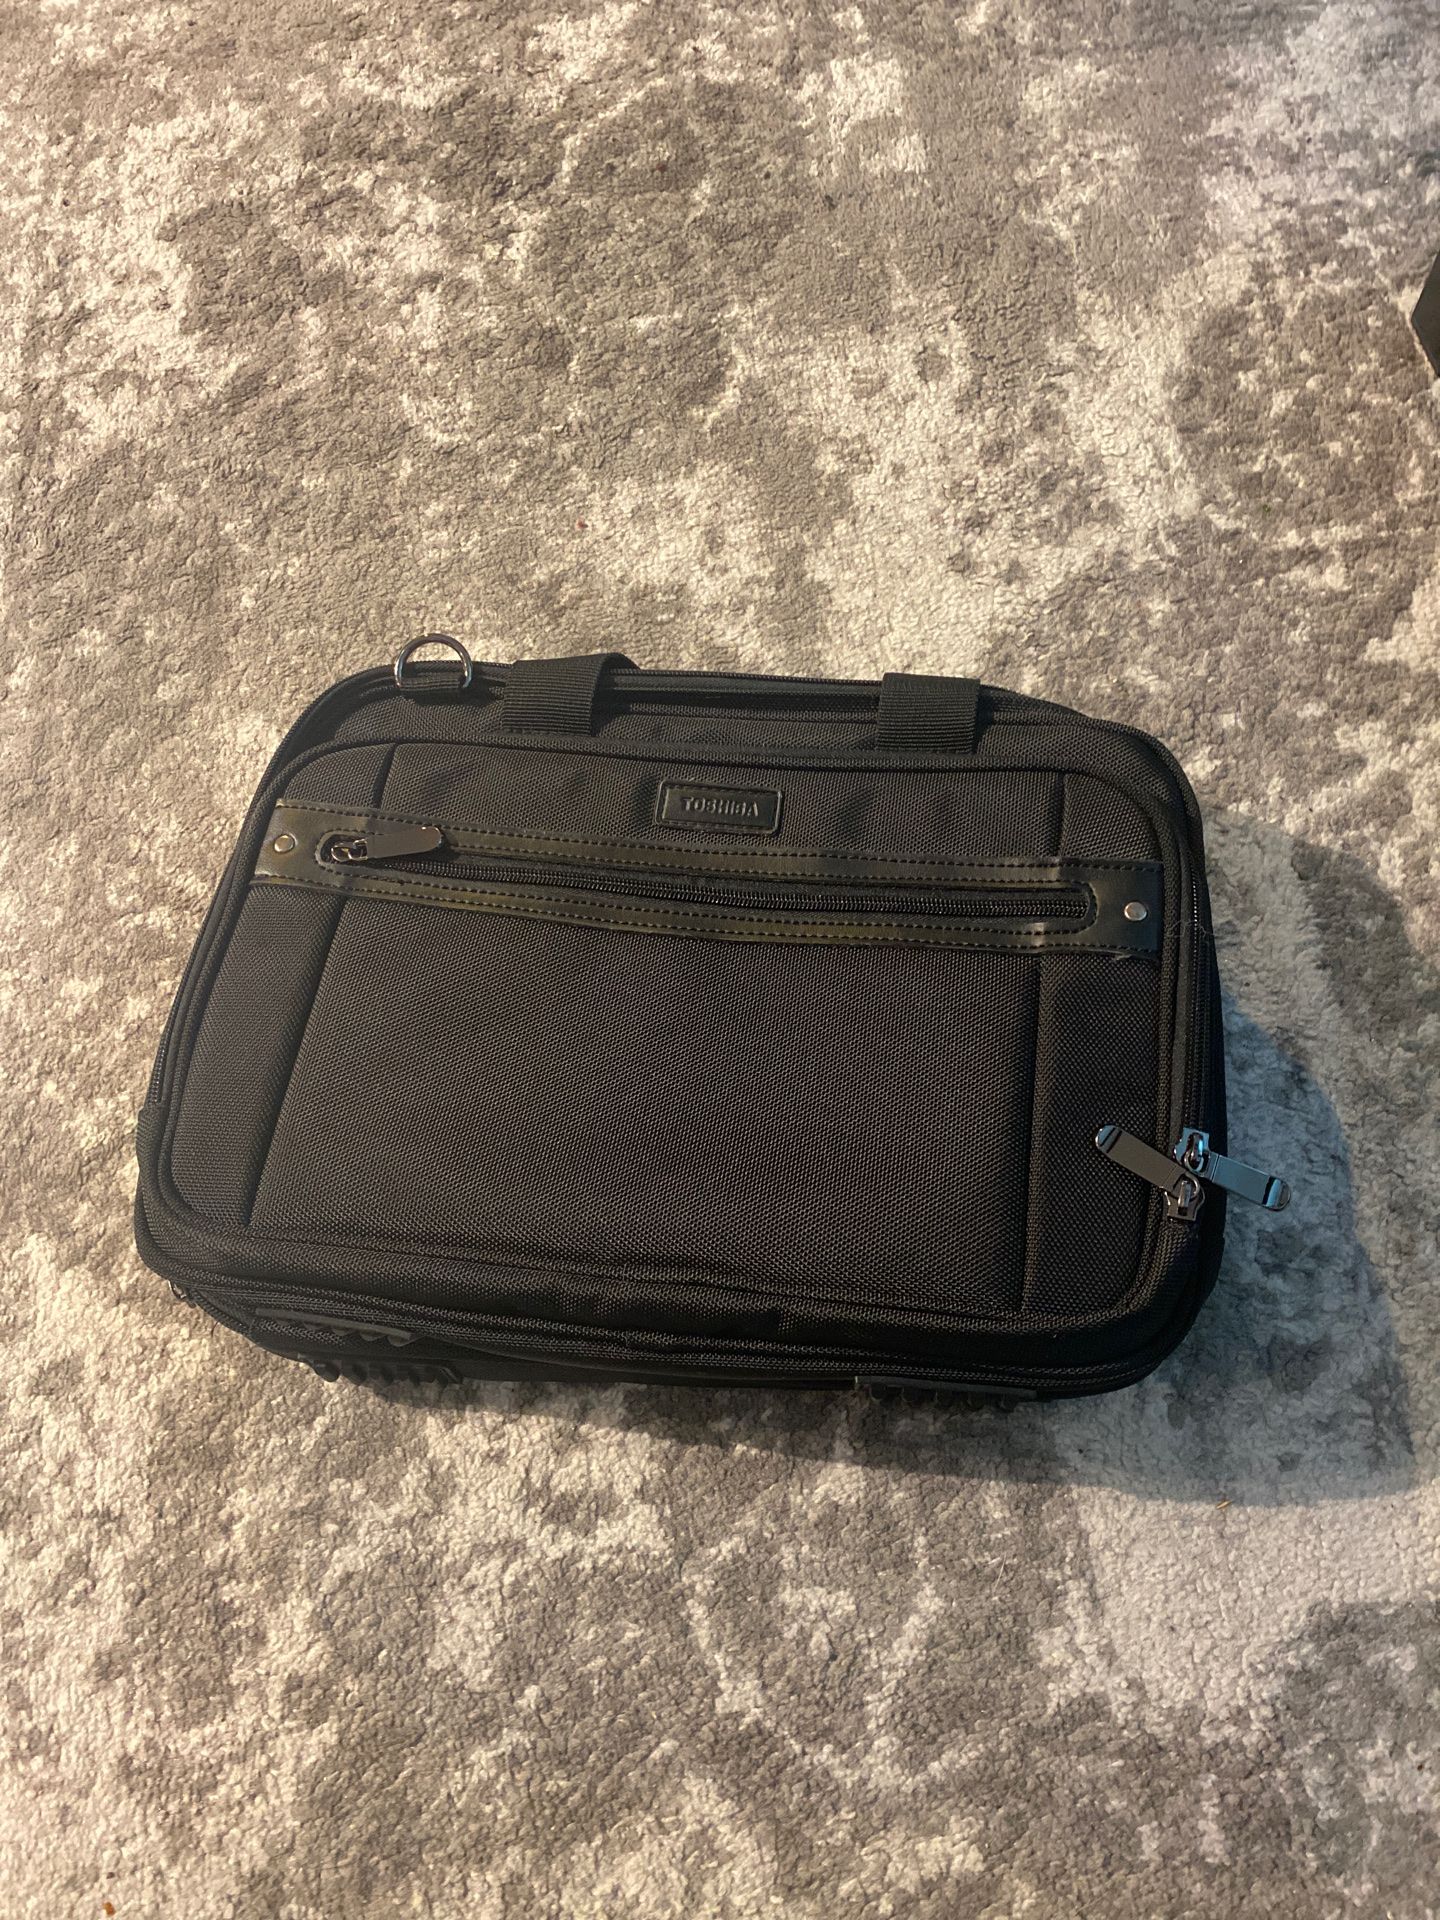 Brand new Toshiba laptop bag